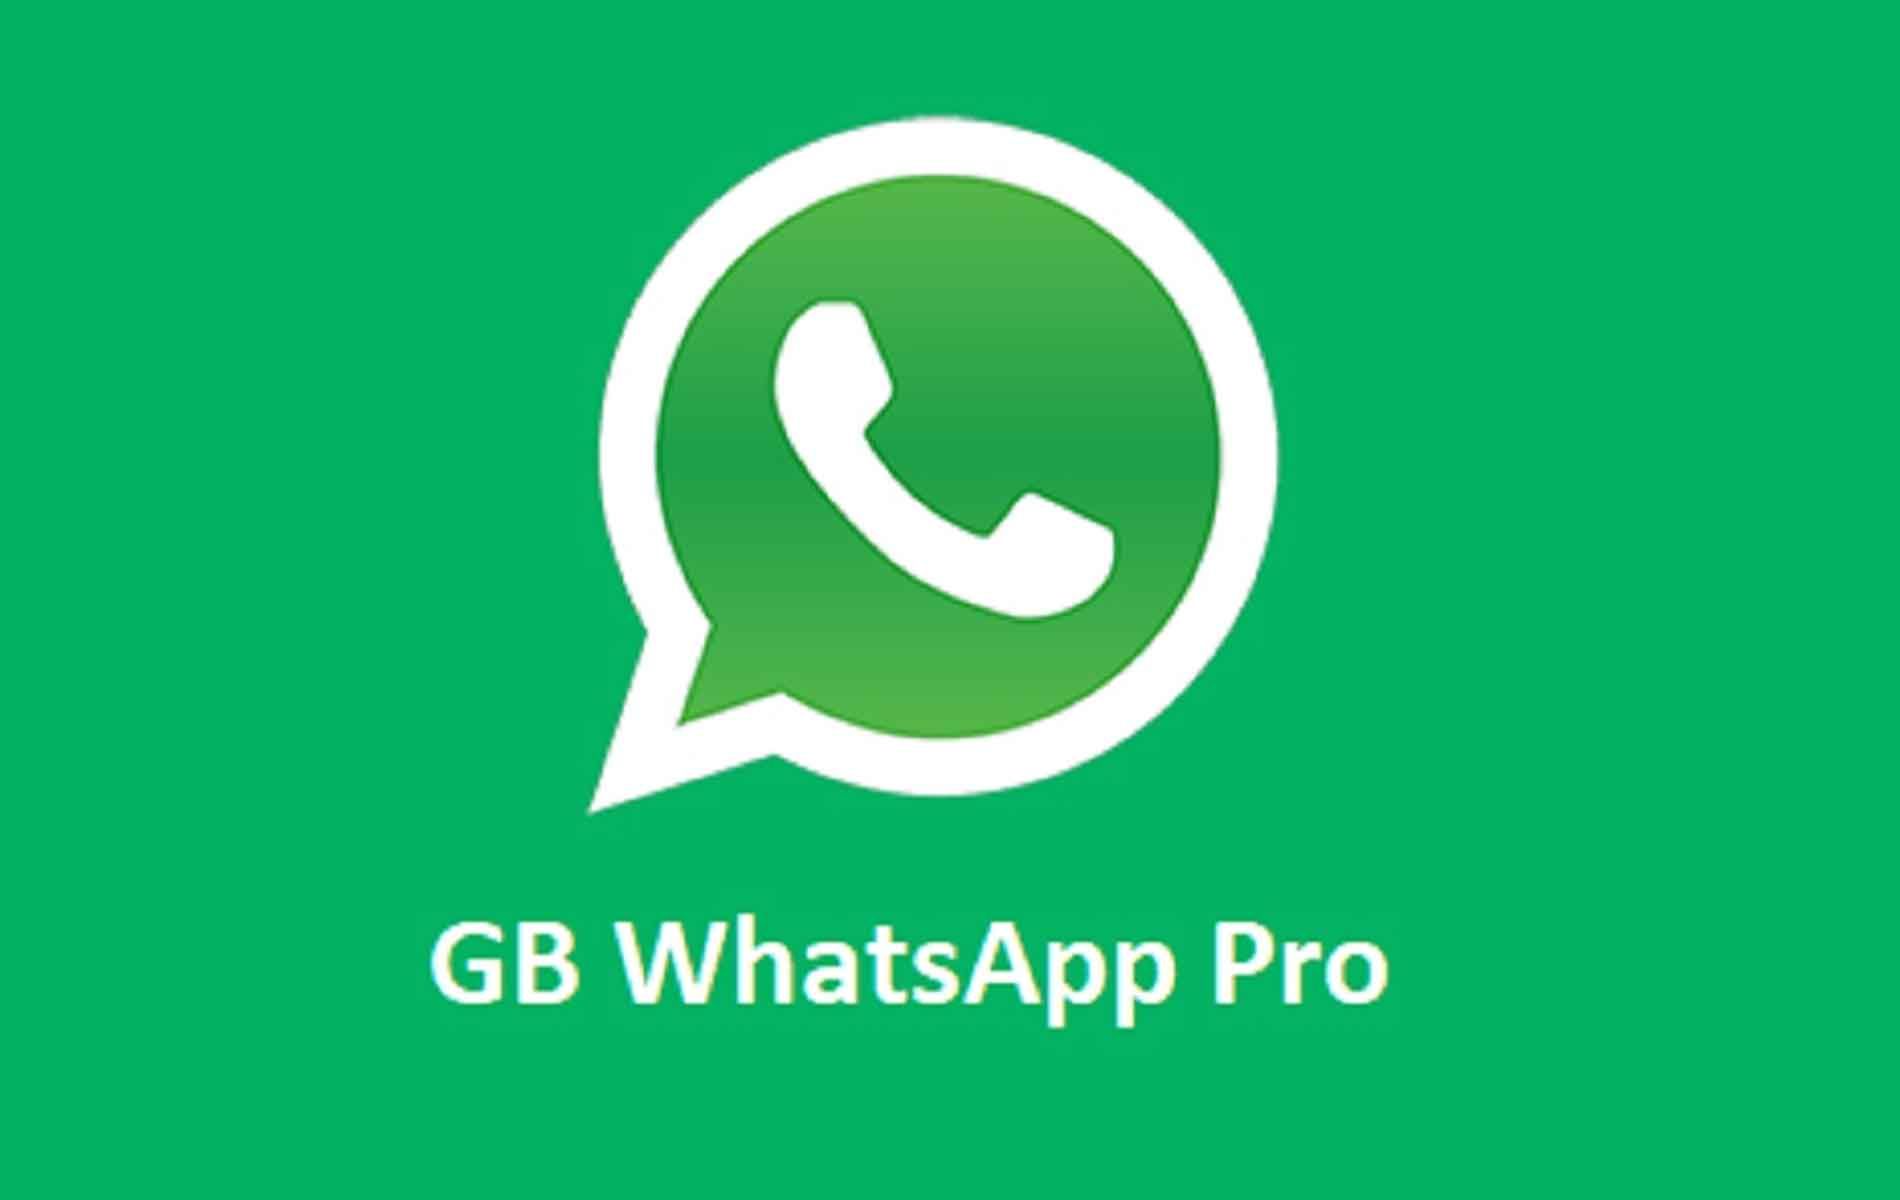 Nikmati Akses Gratis dengan Proxy WA GB WhatsApp Pro Tanpa VPN: Download Sekarang!